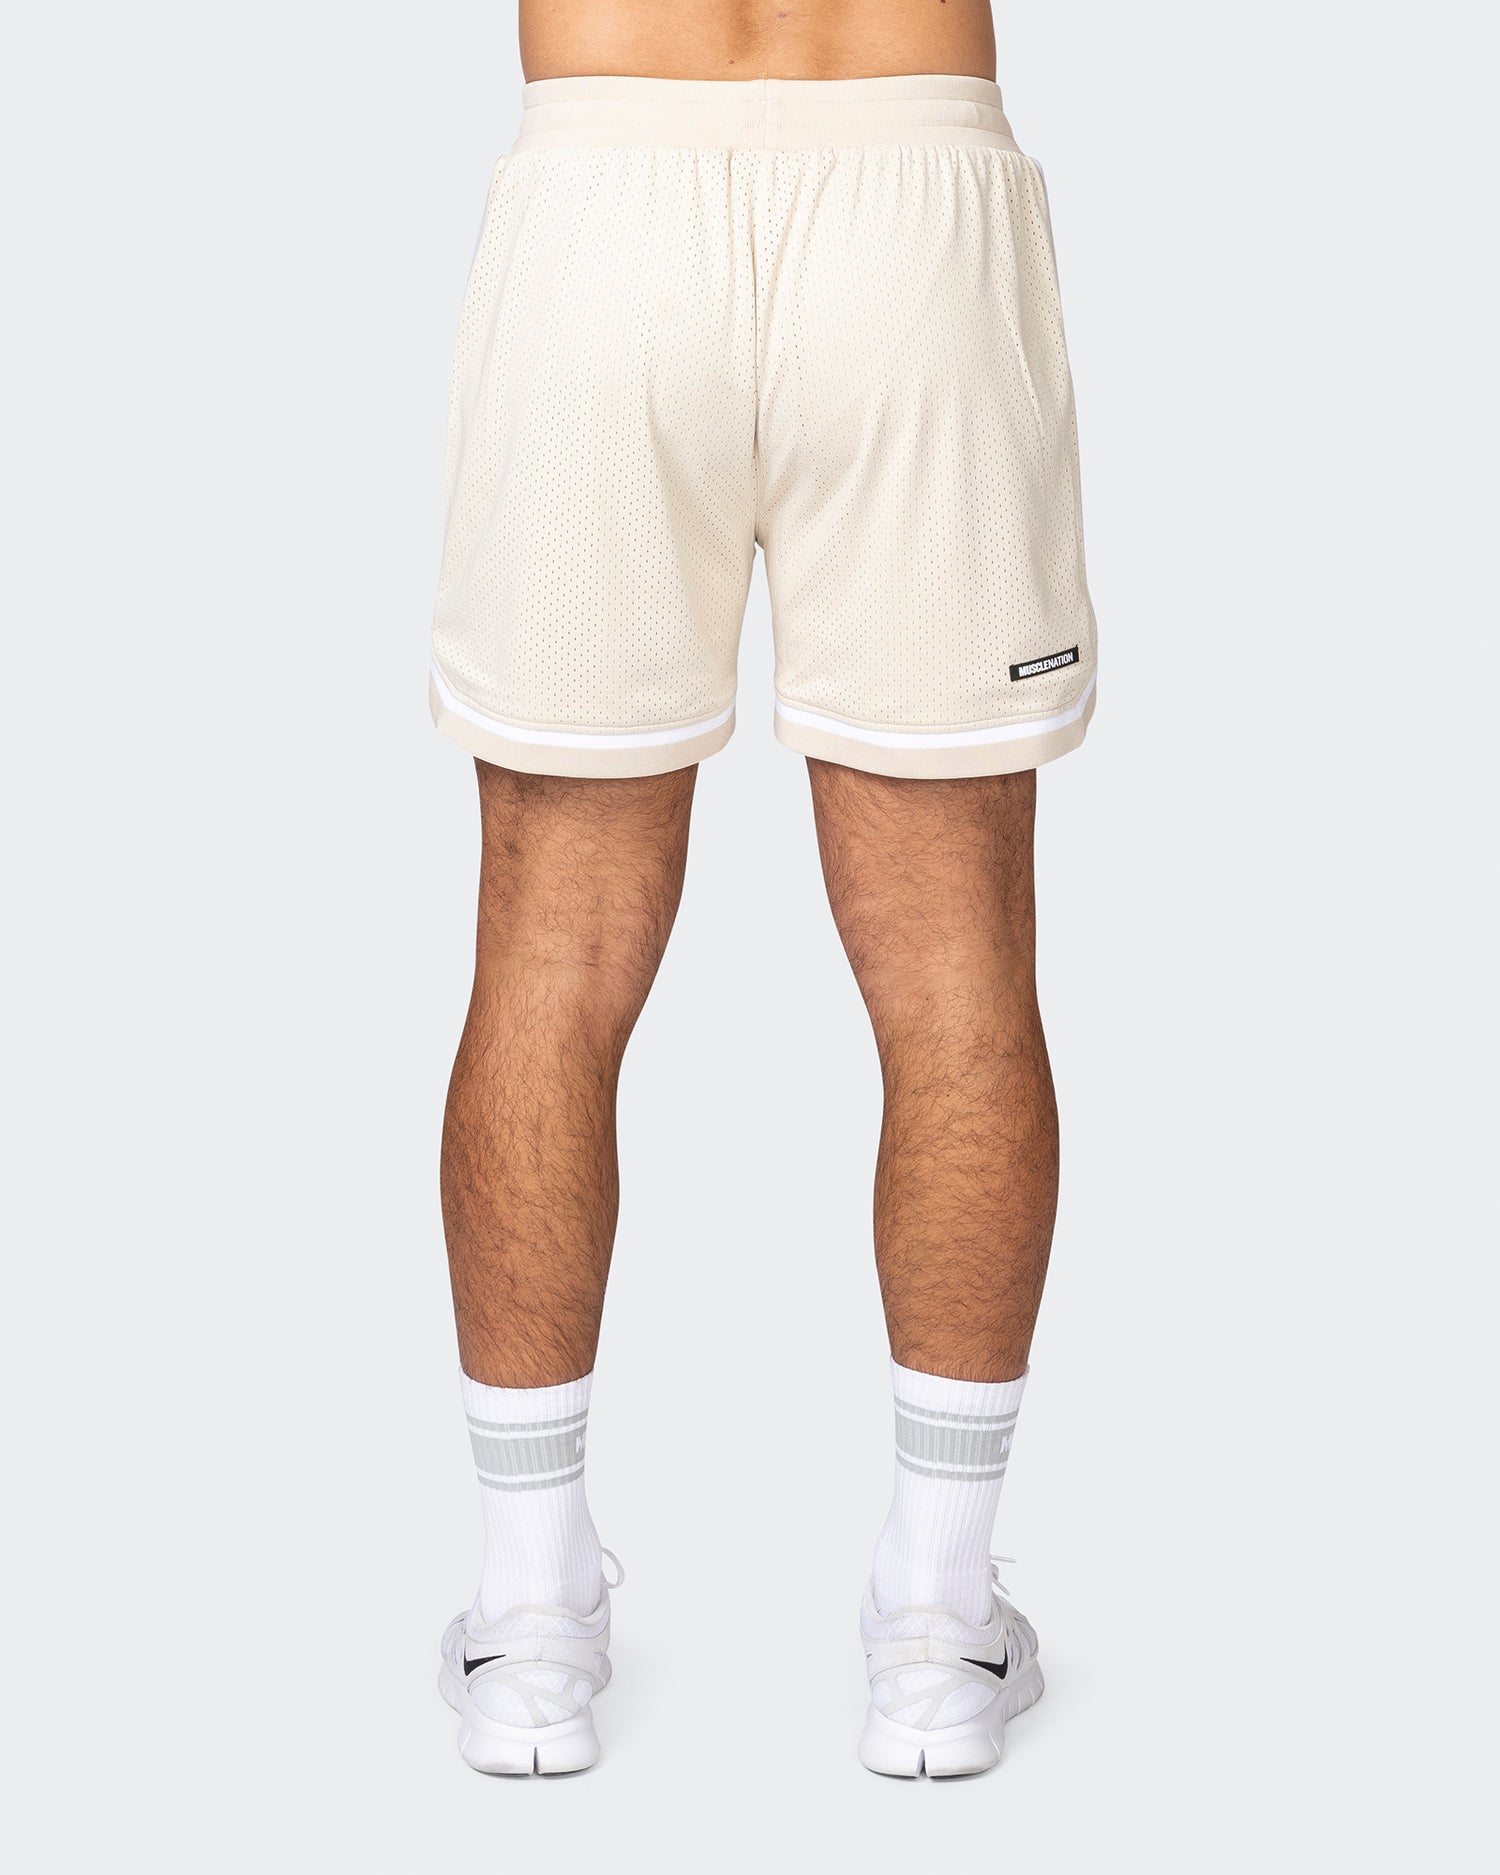 Mens 5" Basketball Shorts - Cream